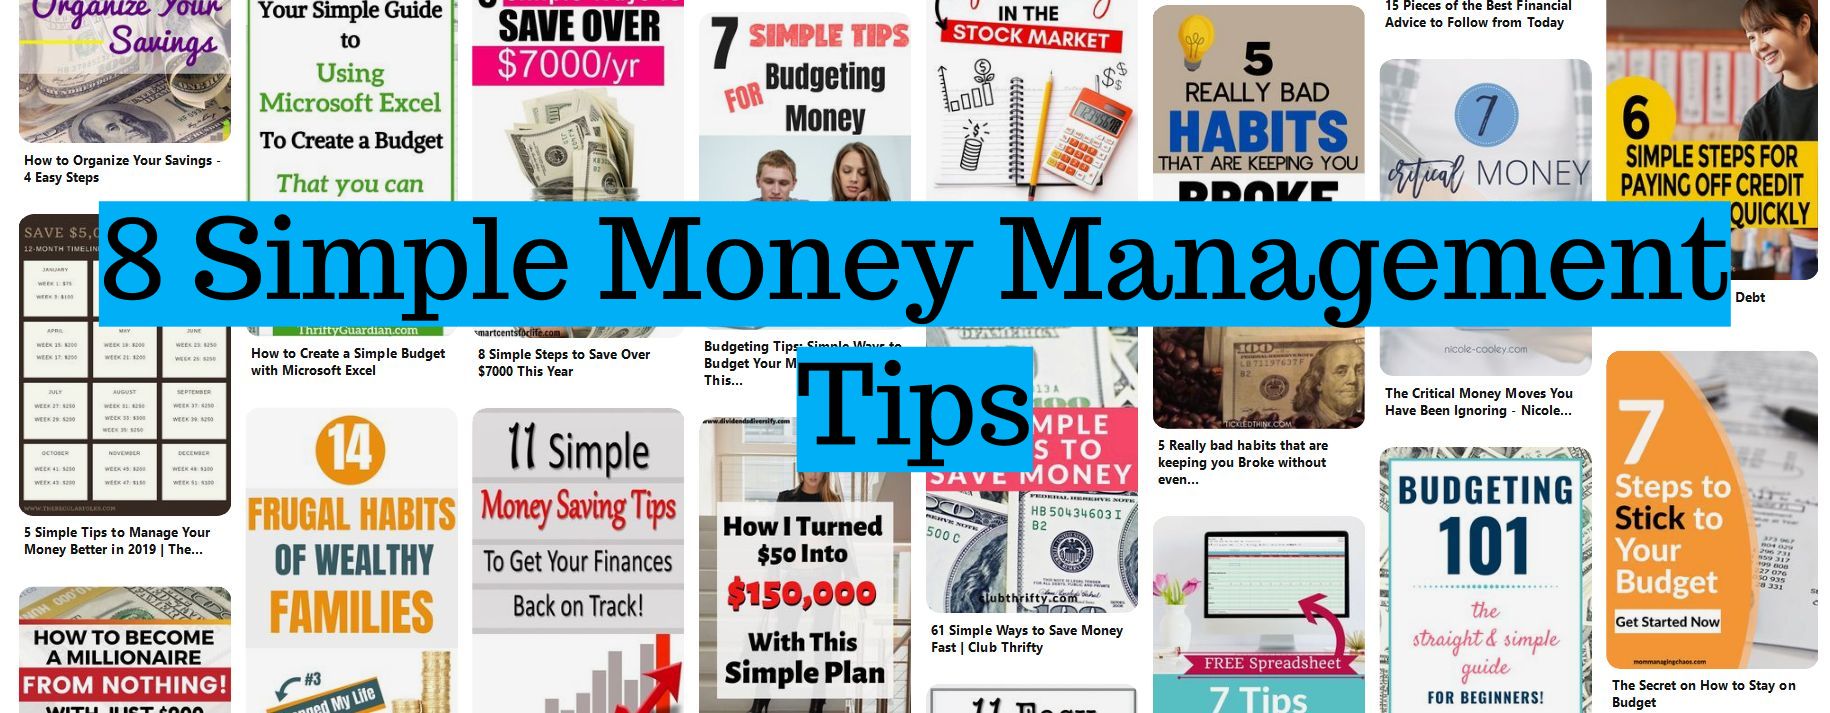 8 Simple8 Simple Money Management Tips(1)